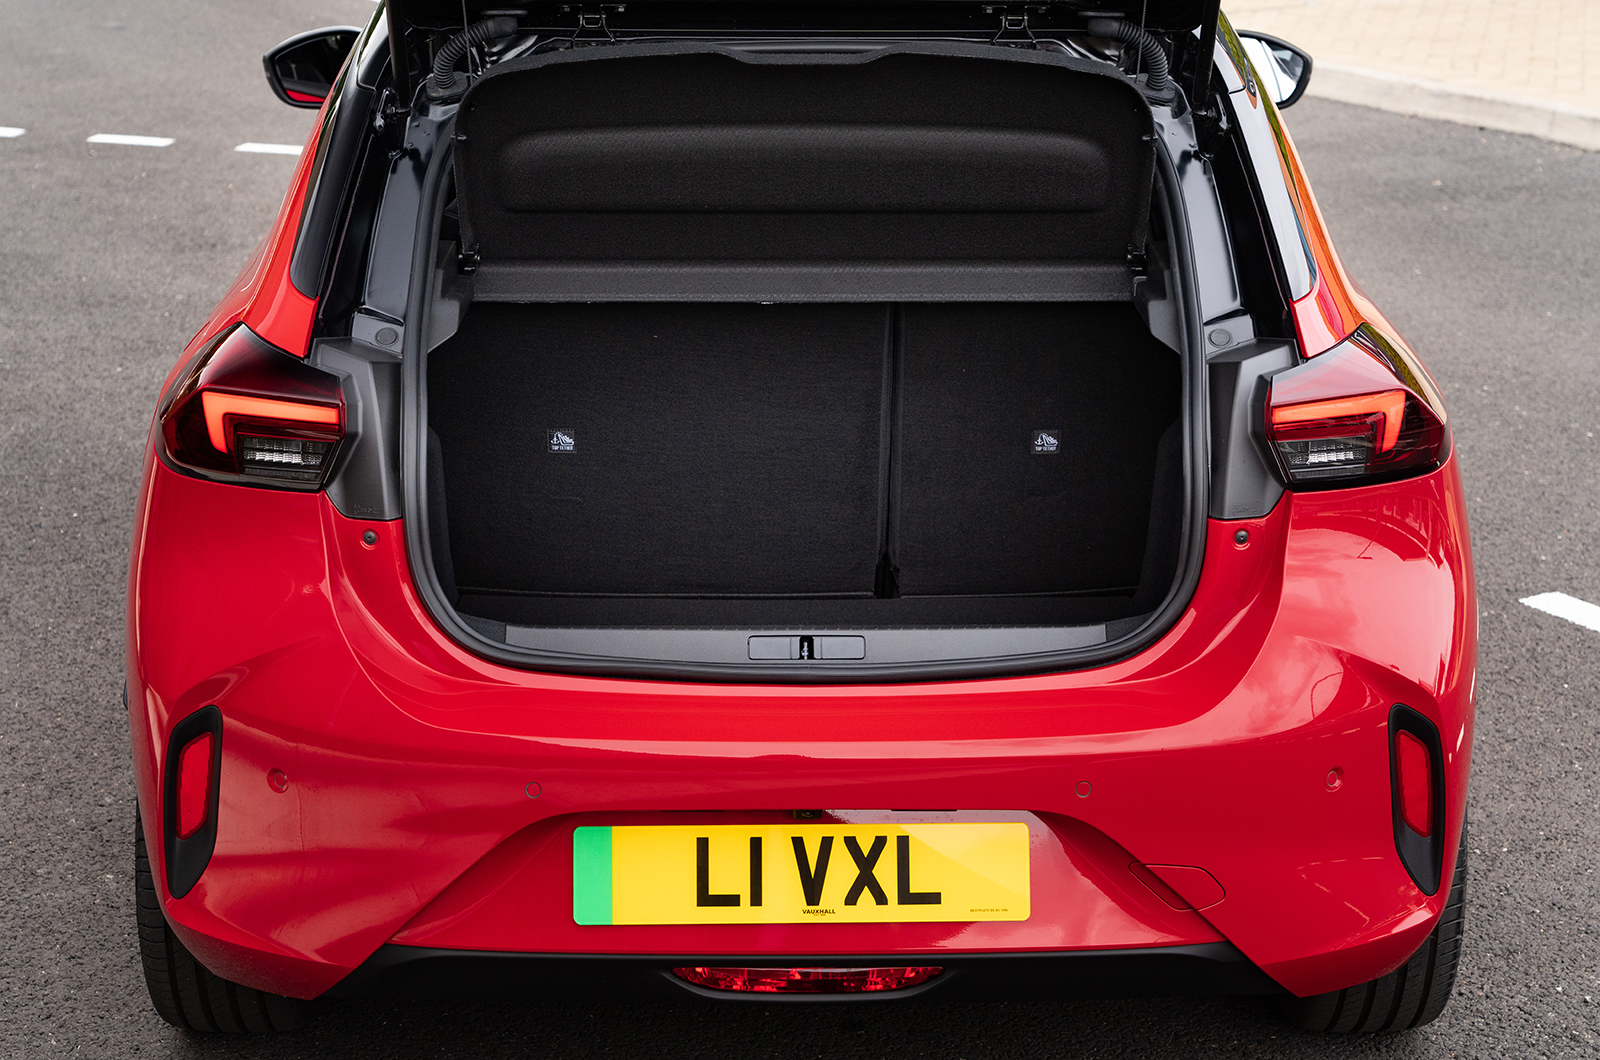 Vauxhall Corsa-e Anniversary Edition review: same electric car